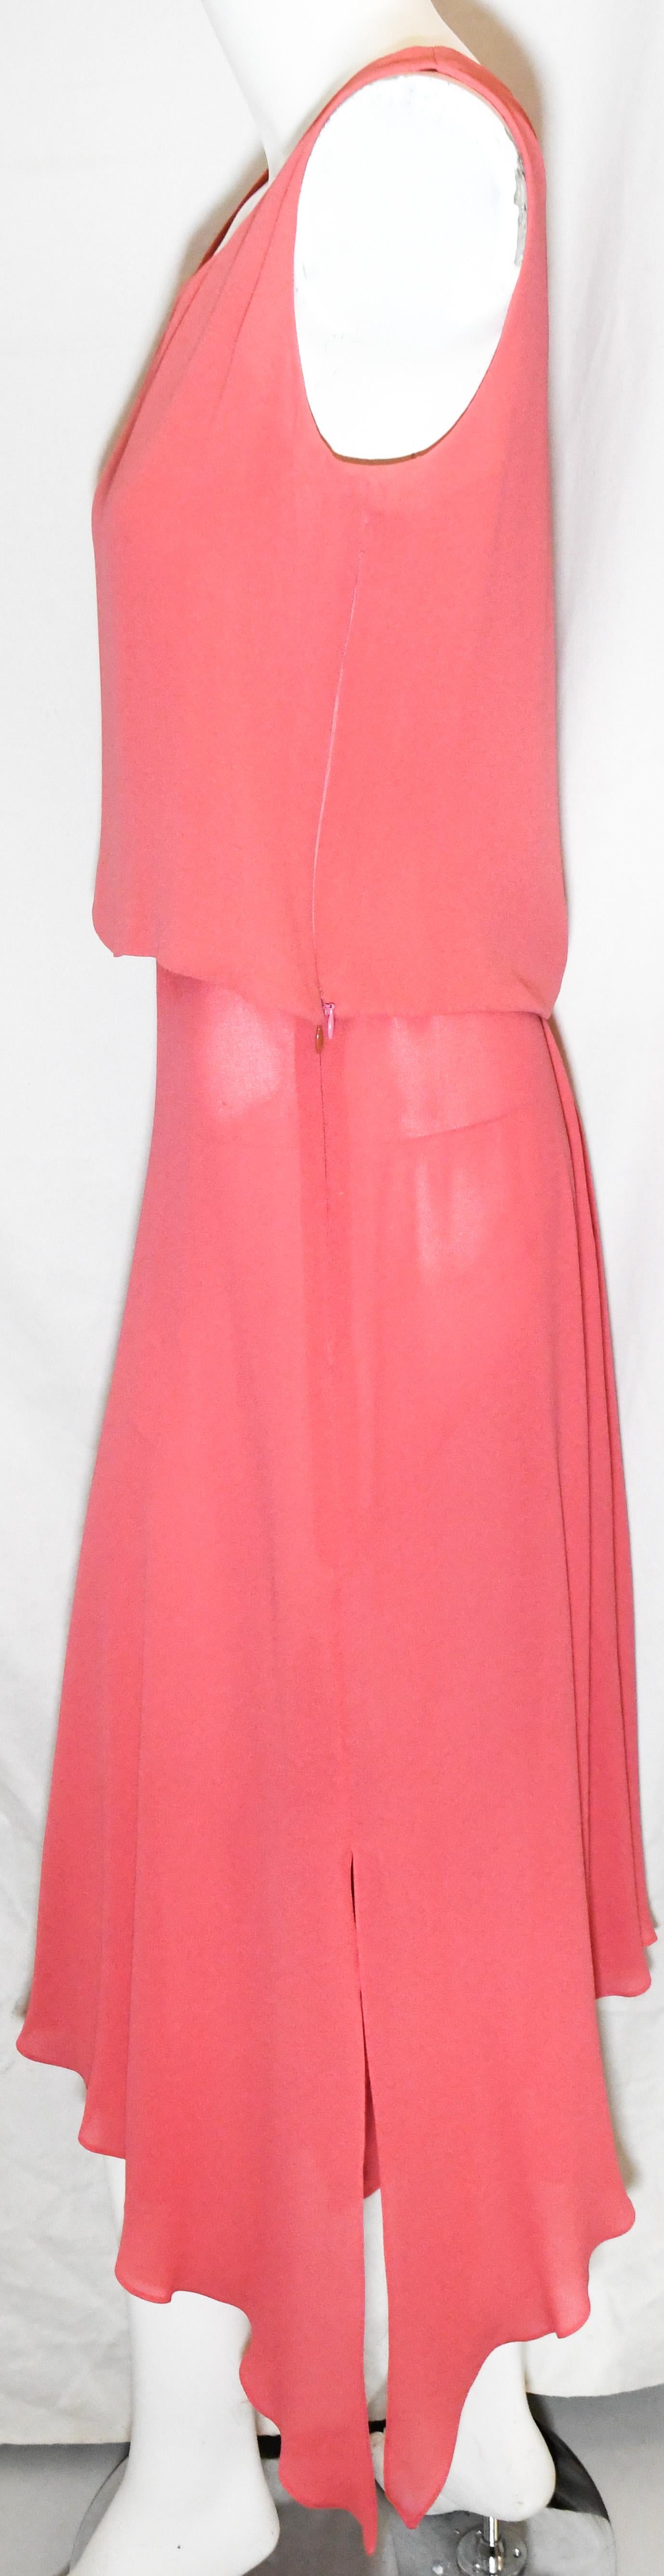 Oscar de la Renta Salmon Crepe de Chine 2 Piece Sleeveless Dress In Excellent Condition For Sale In Palm Beach, FL